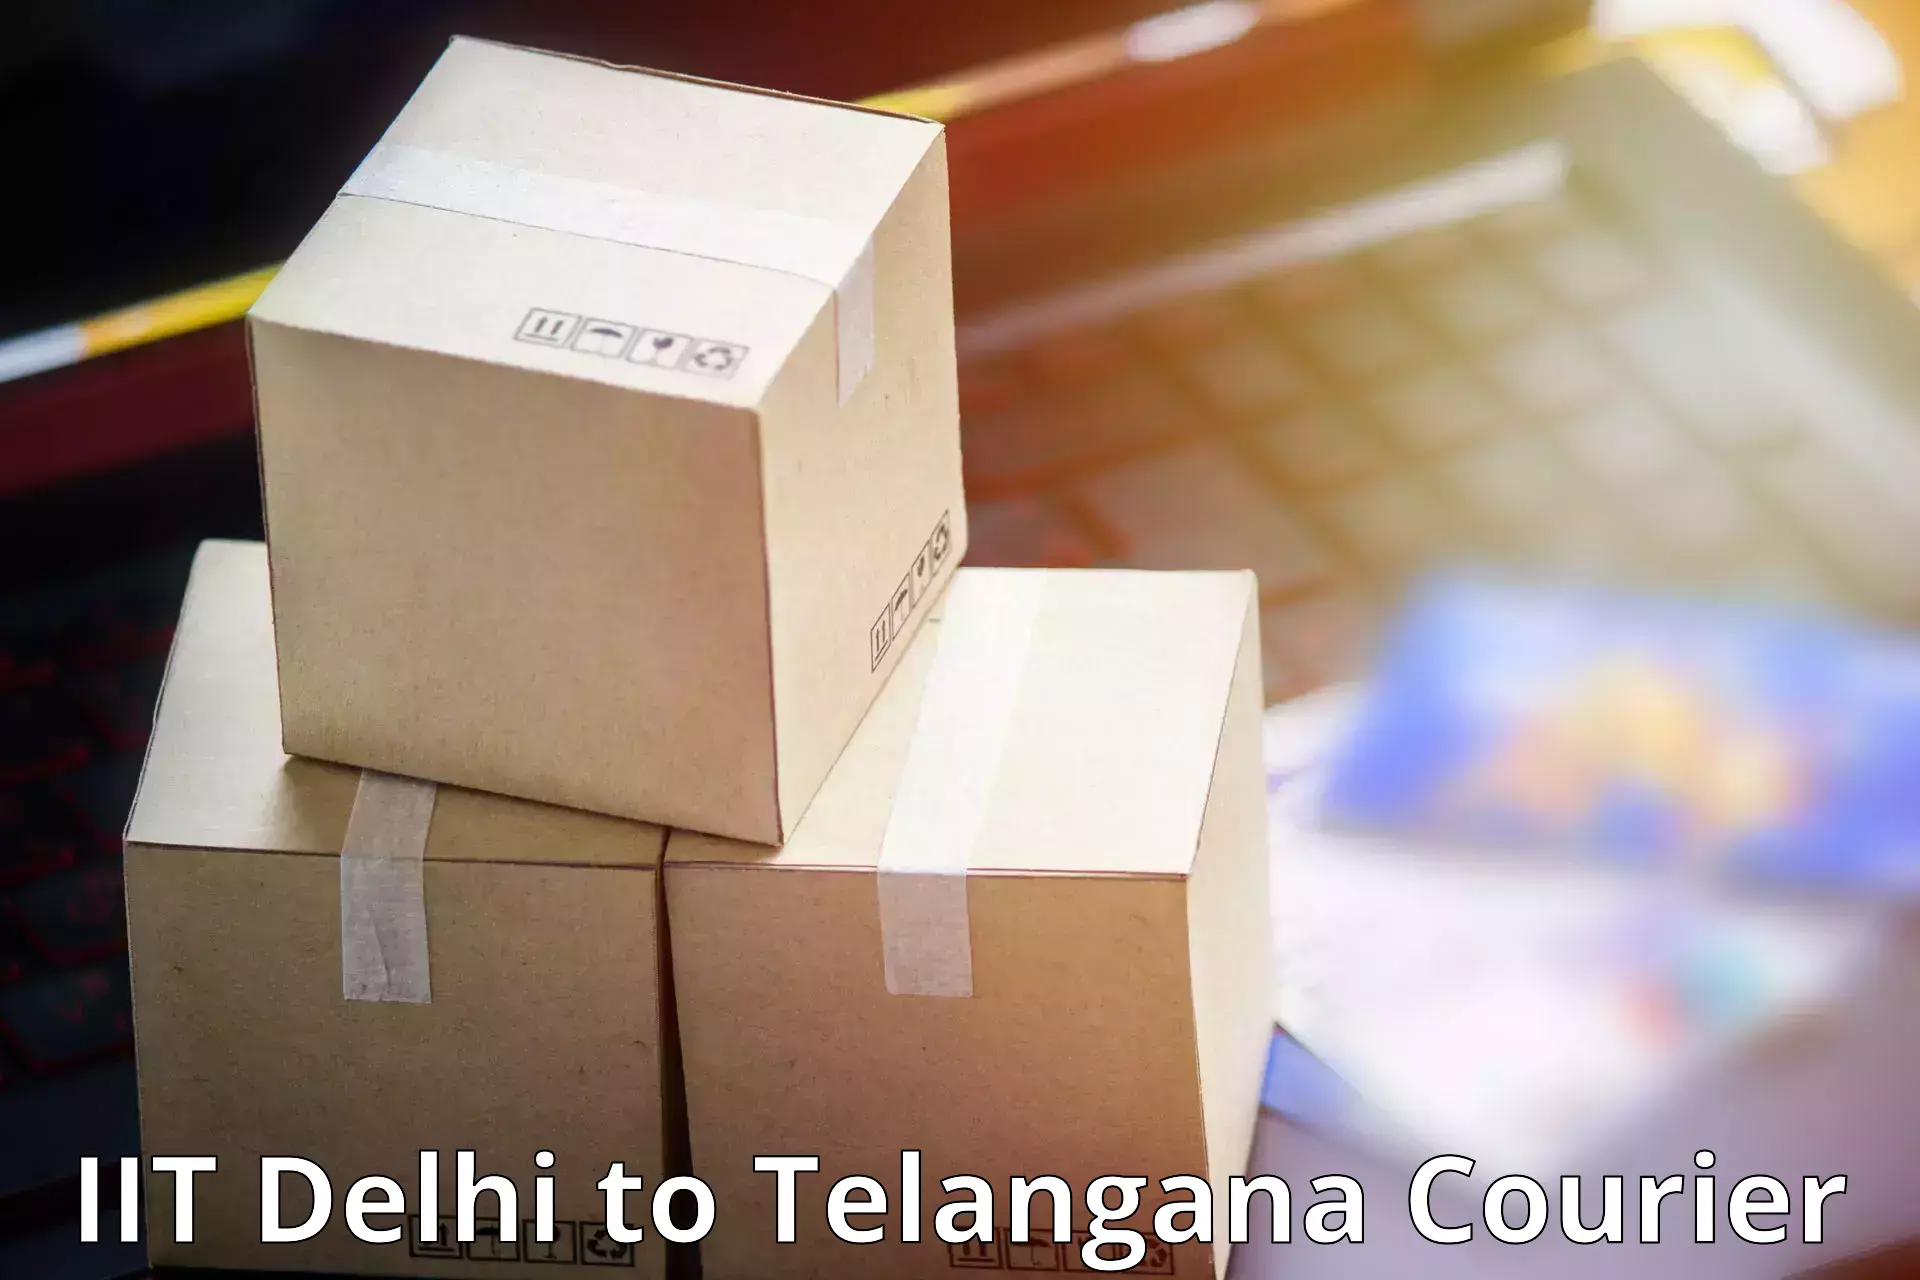 Full-service courier options IIT Delhi to Mudigonda